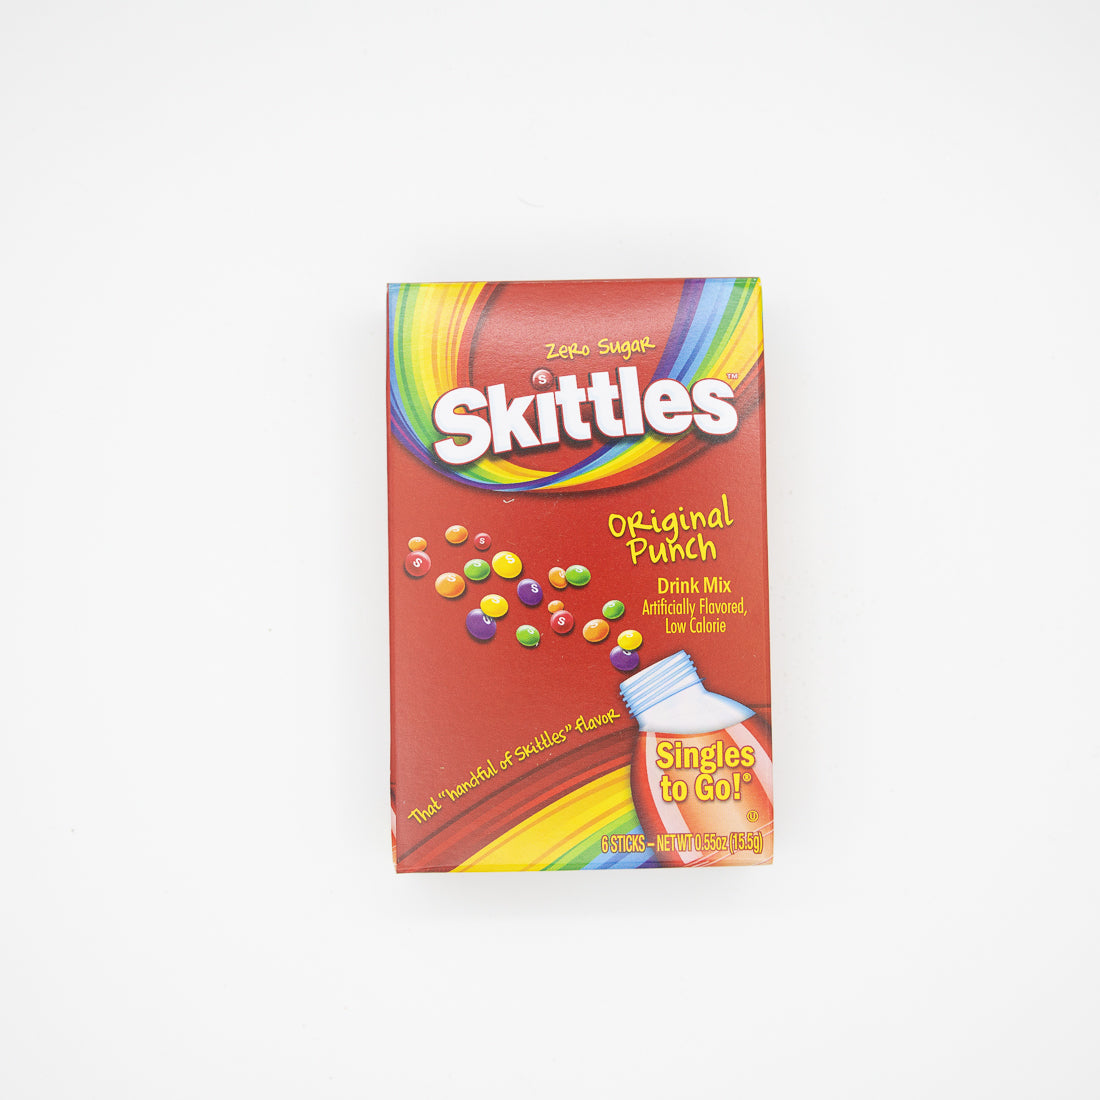 Skittles Original Punch Drink Mix